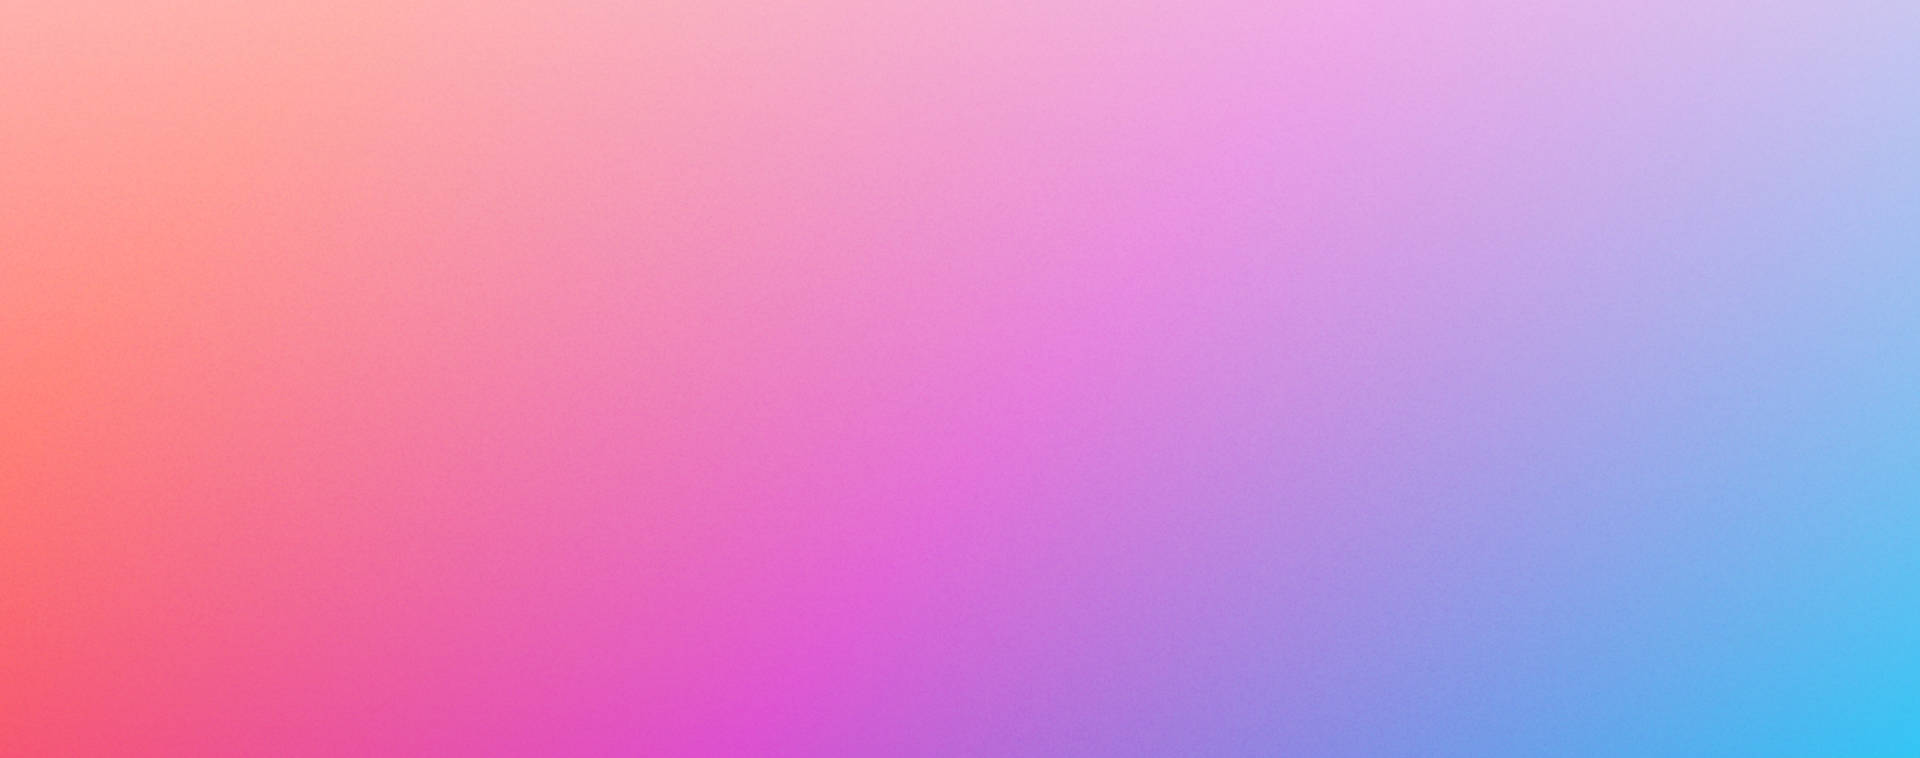 Pastel Gradient Macbook Air Background